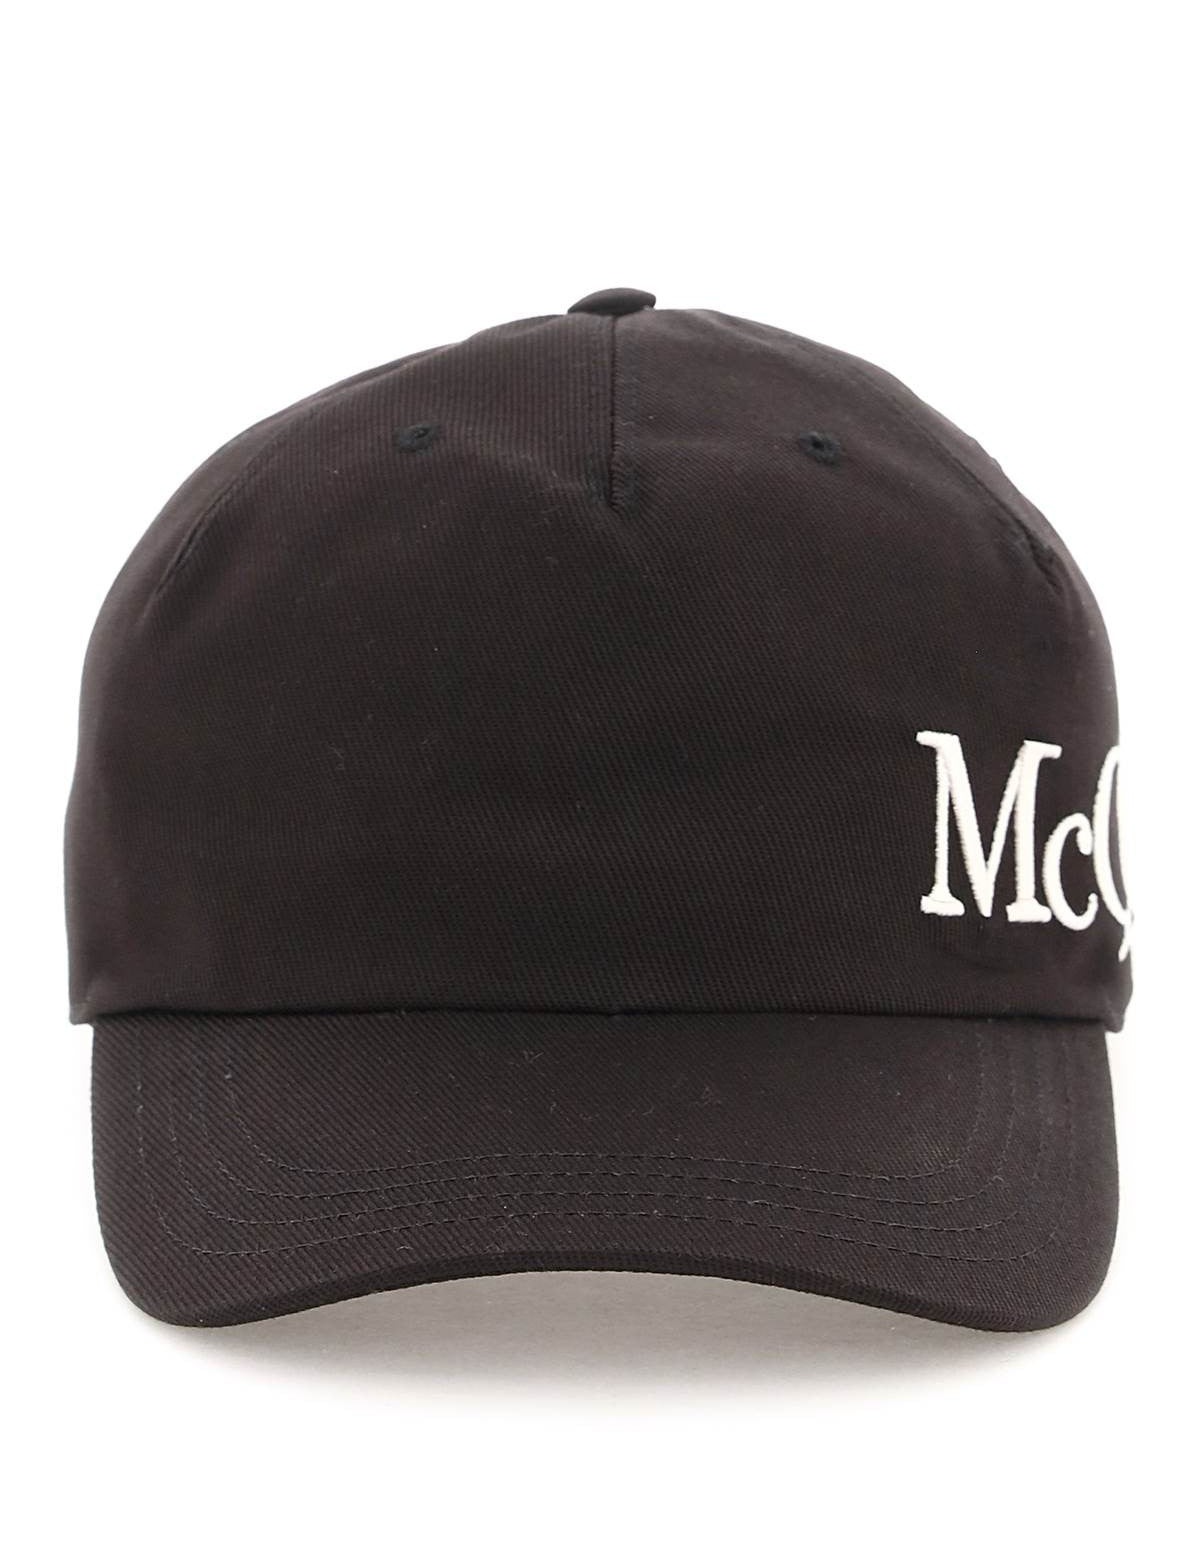 alexander-mcqueen-baseball-hat-with-oversized-logo_edcddbe3-894a-468c-82eb-091bb9a0918e.jpg